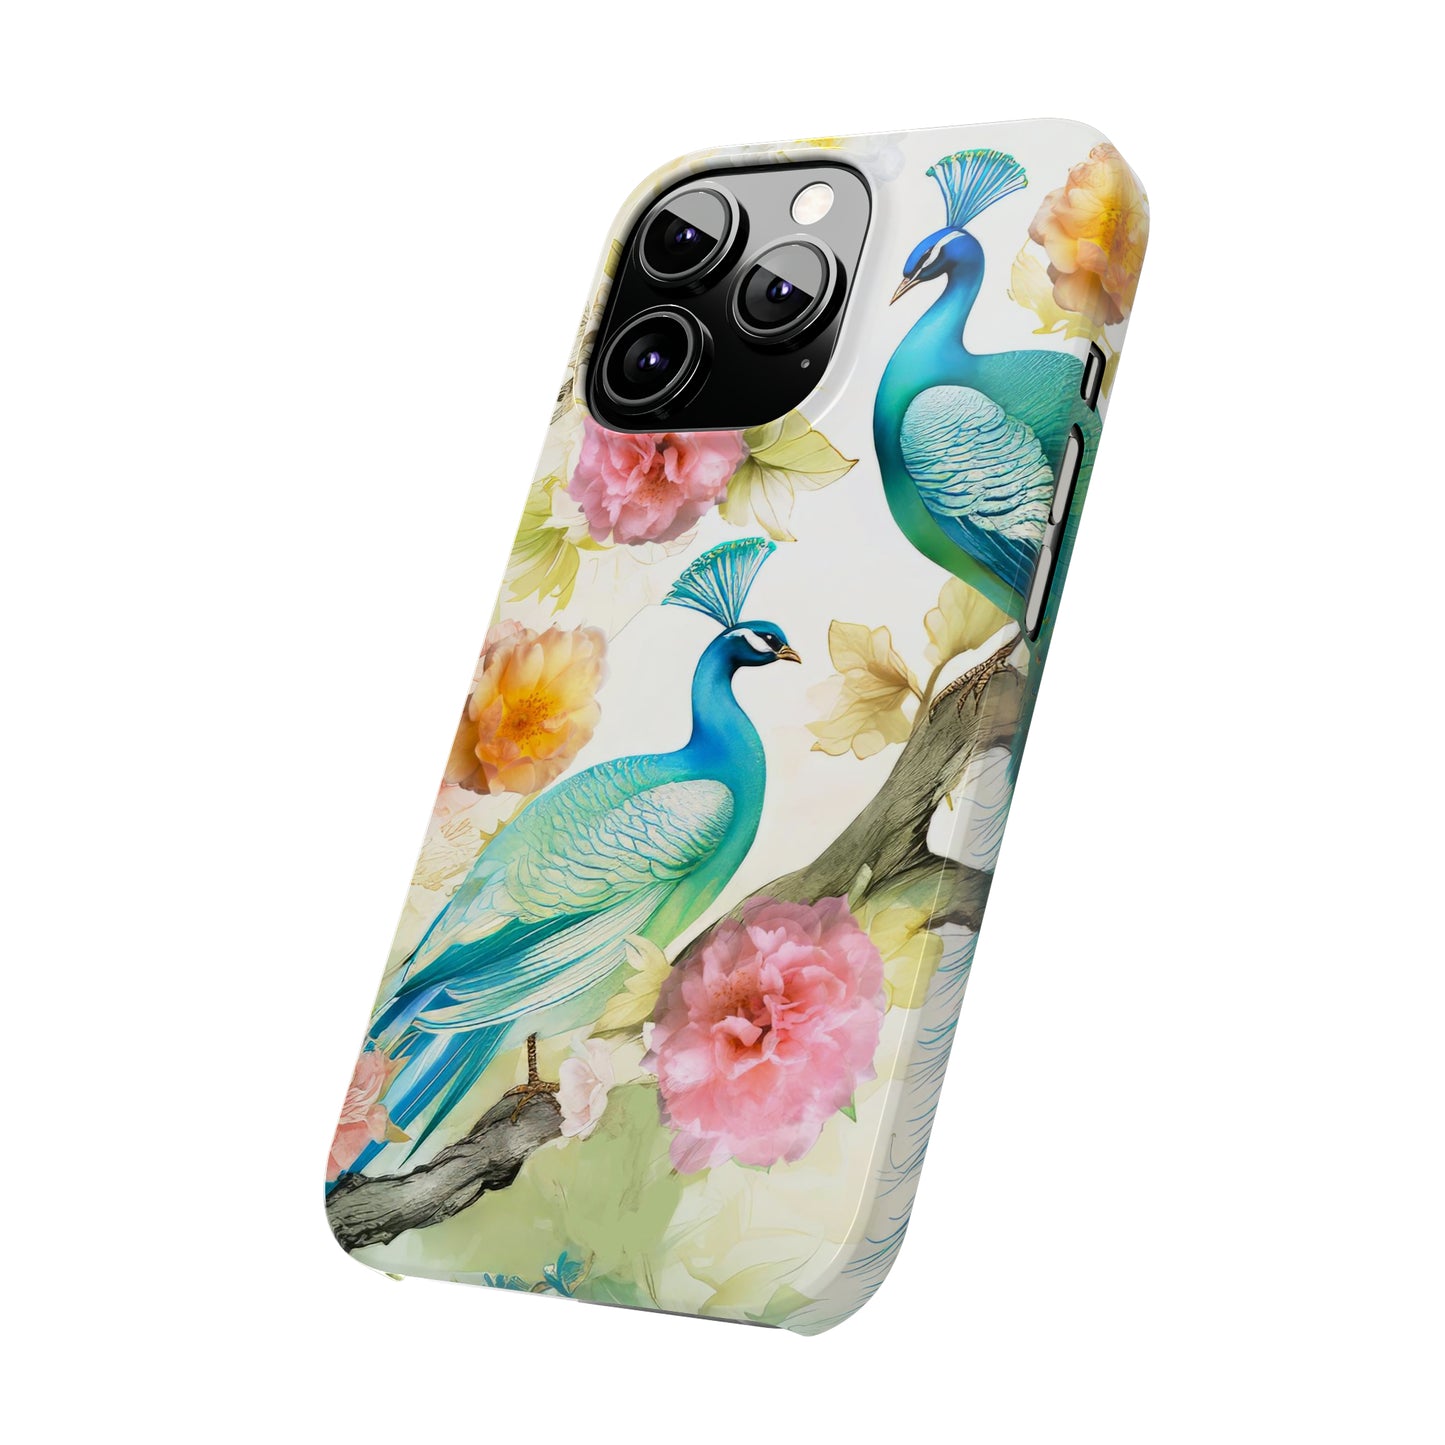 Artistic Peacock iPhone Case